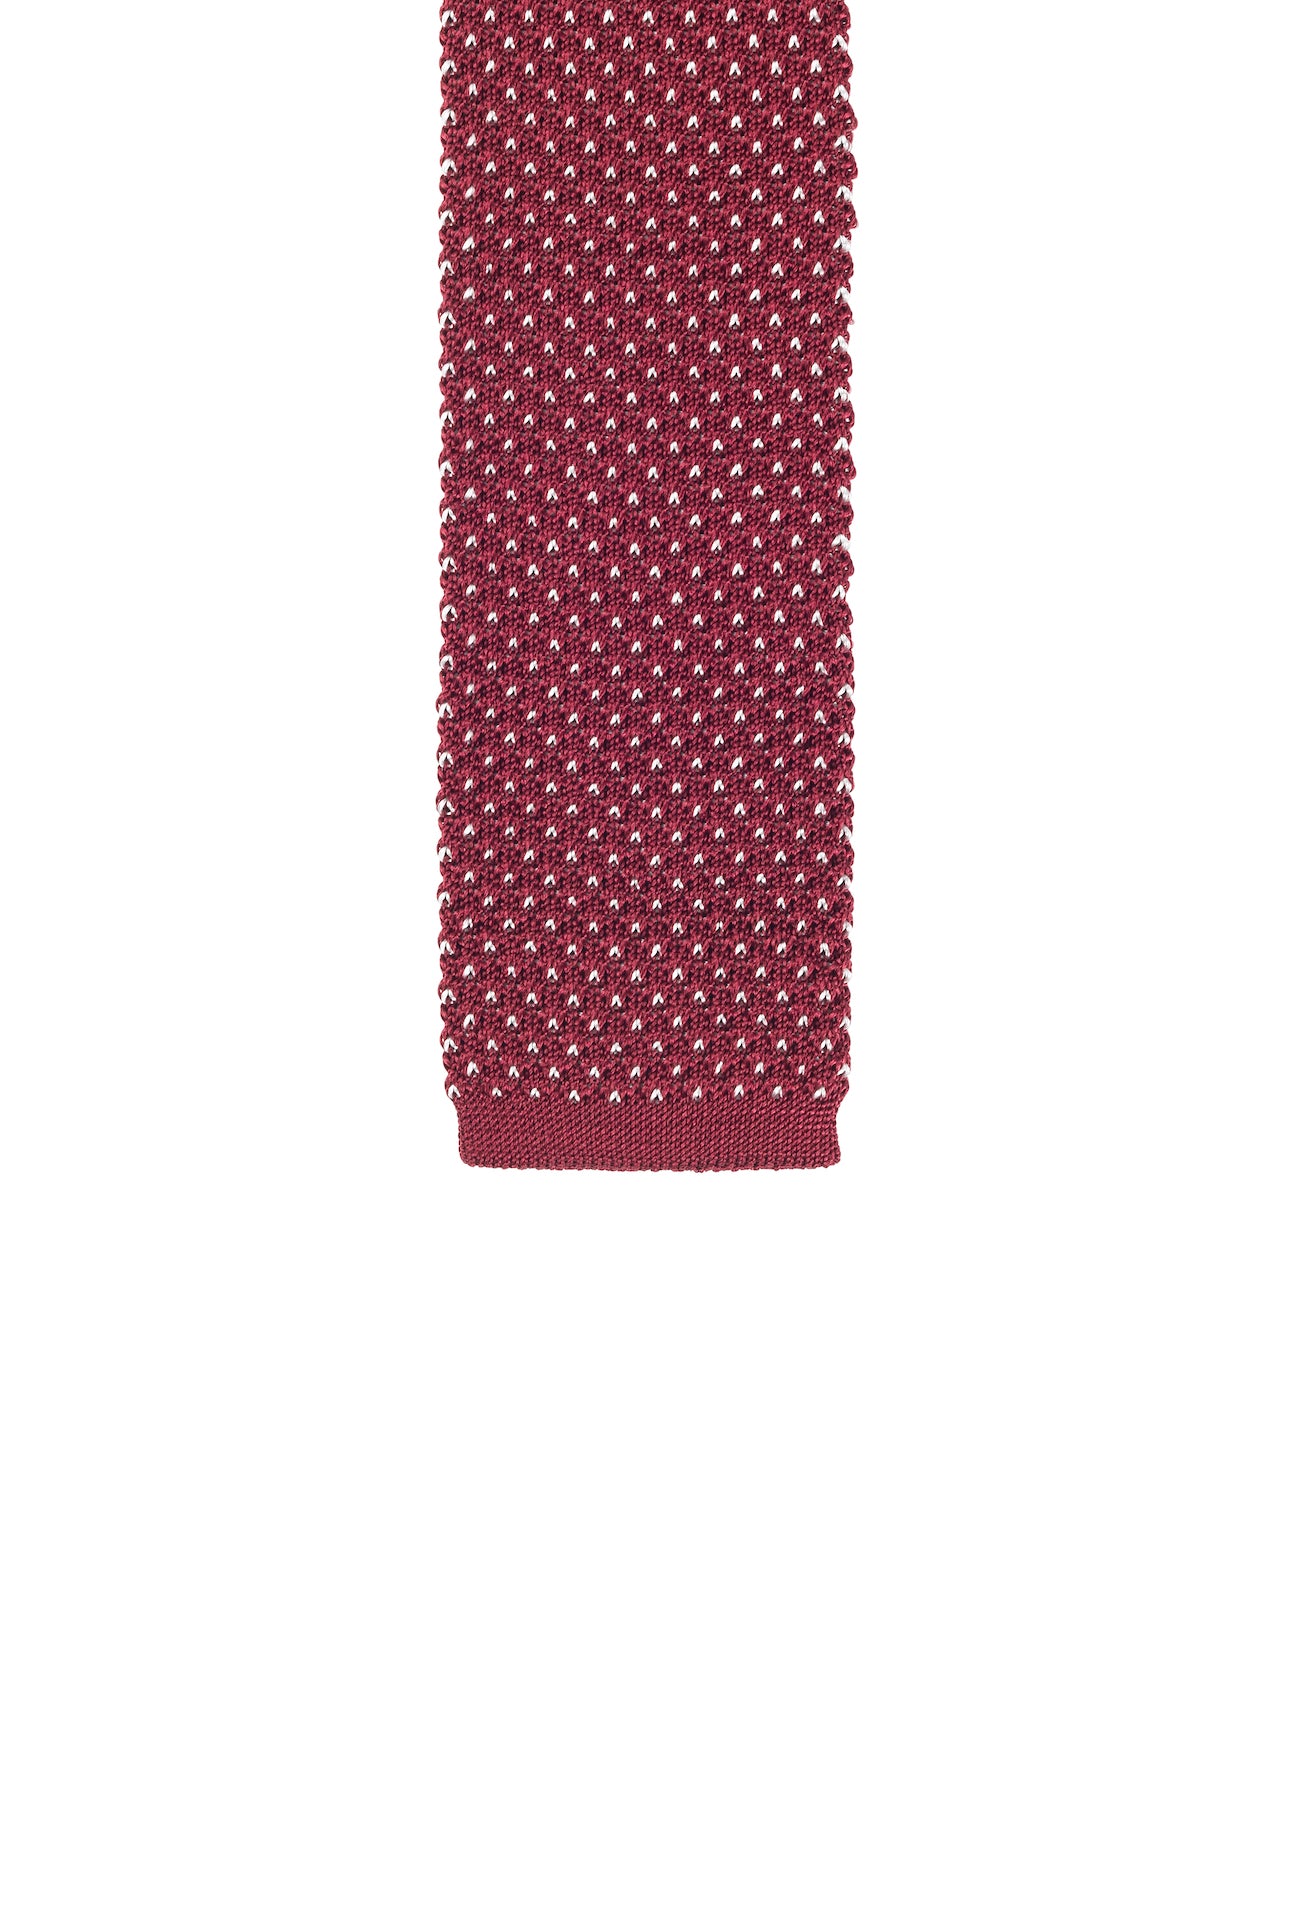 Claret Silk Birdseye Tie